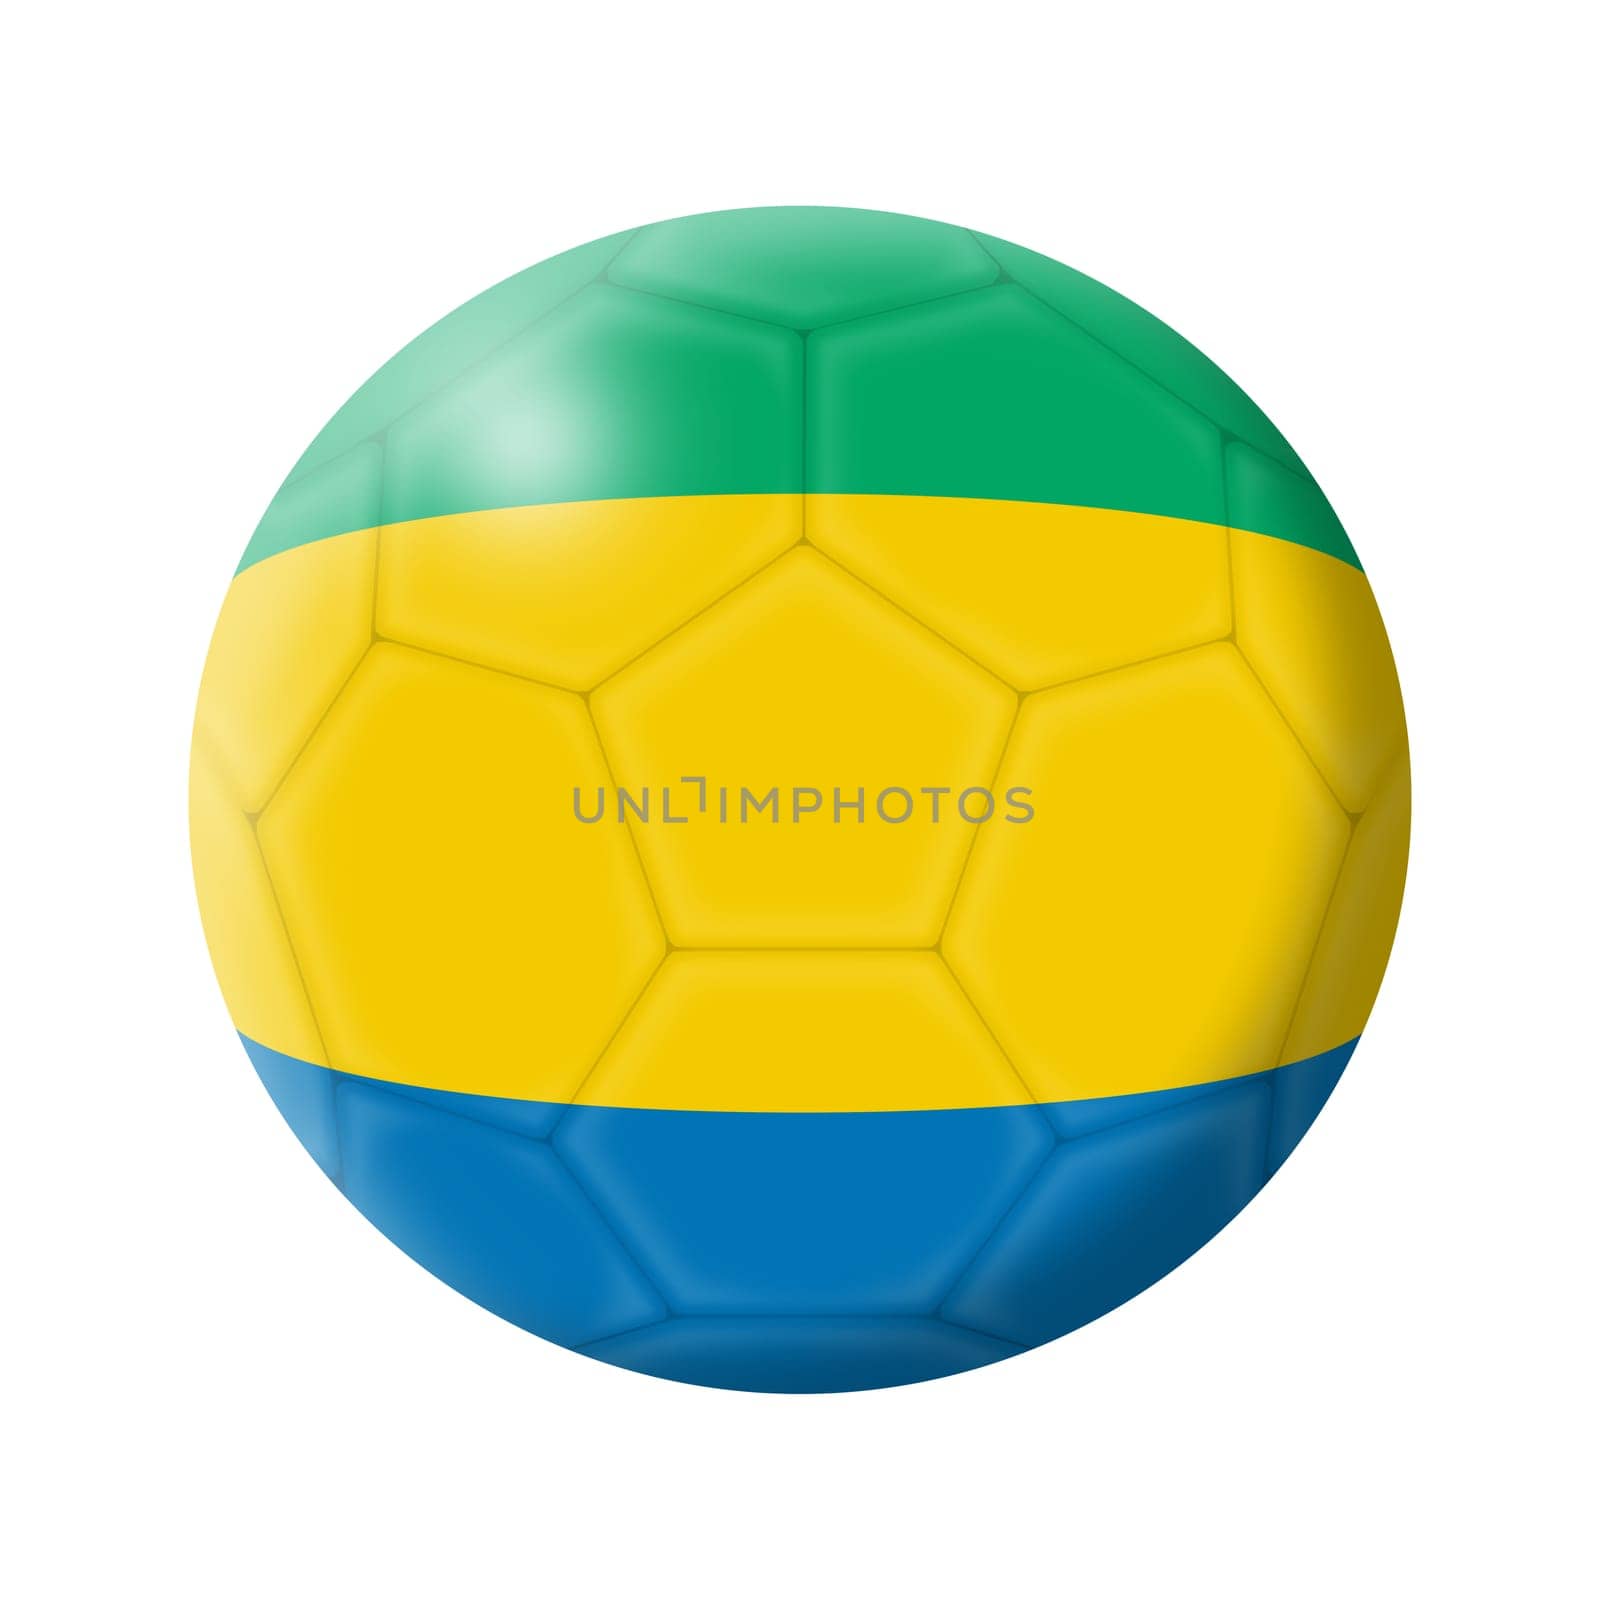 Gabon soccer ball football 3d illustration by VivacityImages